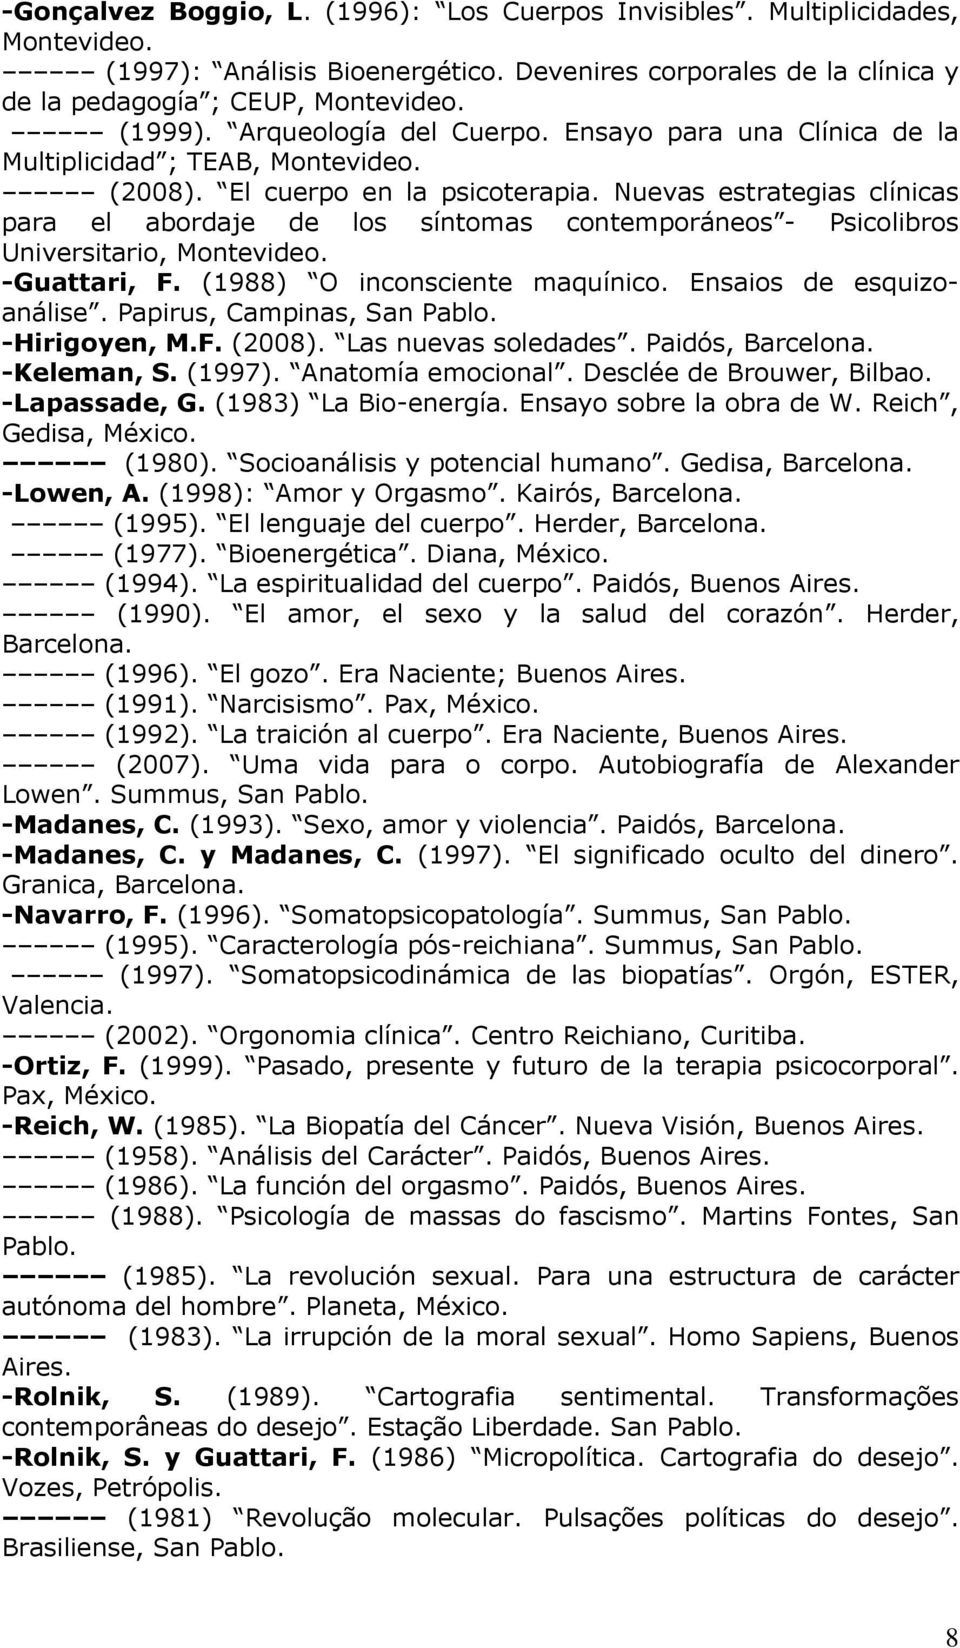 1988) O te maquínico. Ensaios de esquizoá pirus, Campinas, San Pablo. -Hirigoyen, M.F. 2008) L u v d d d B -Keleman, S. 1997) A t m m é d B uw B -Lapassade, G. 1983) L B -energía.